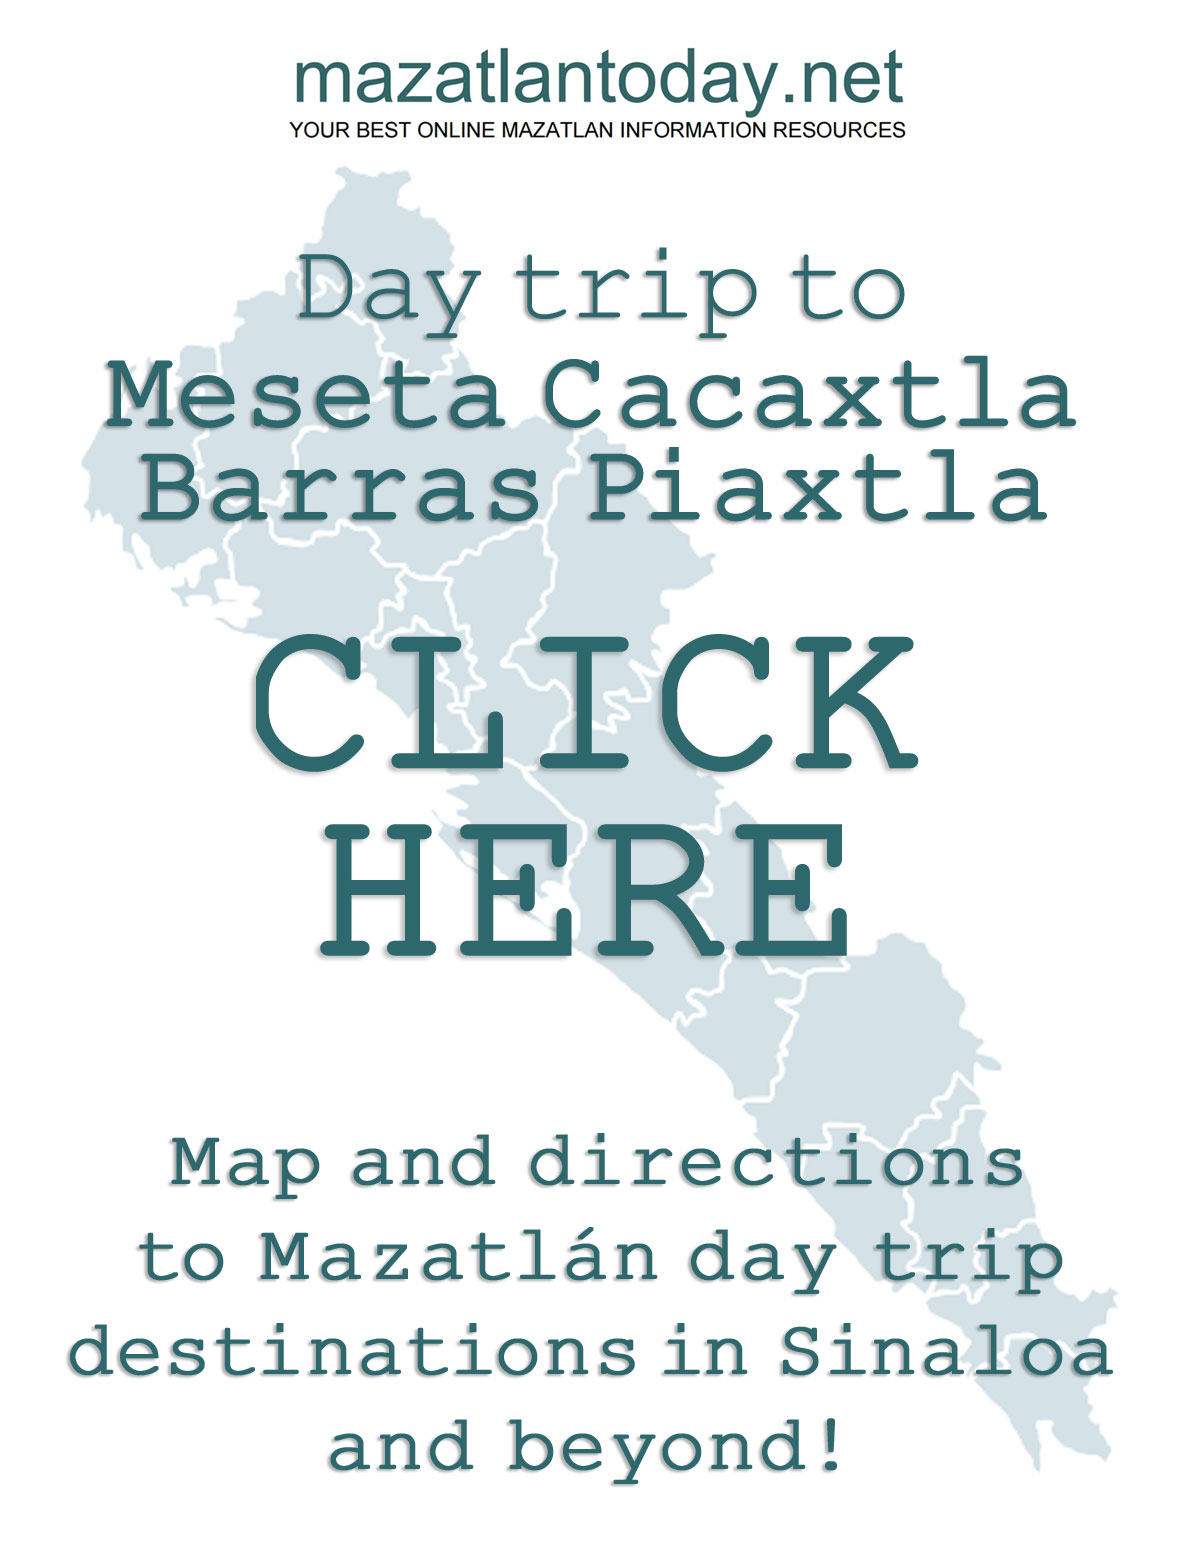 Download free Mazatlan - Meseta Cacaxtla Barras Piaxtla day trip map and directions